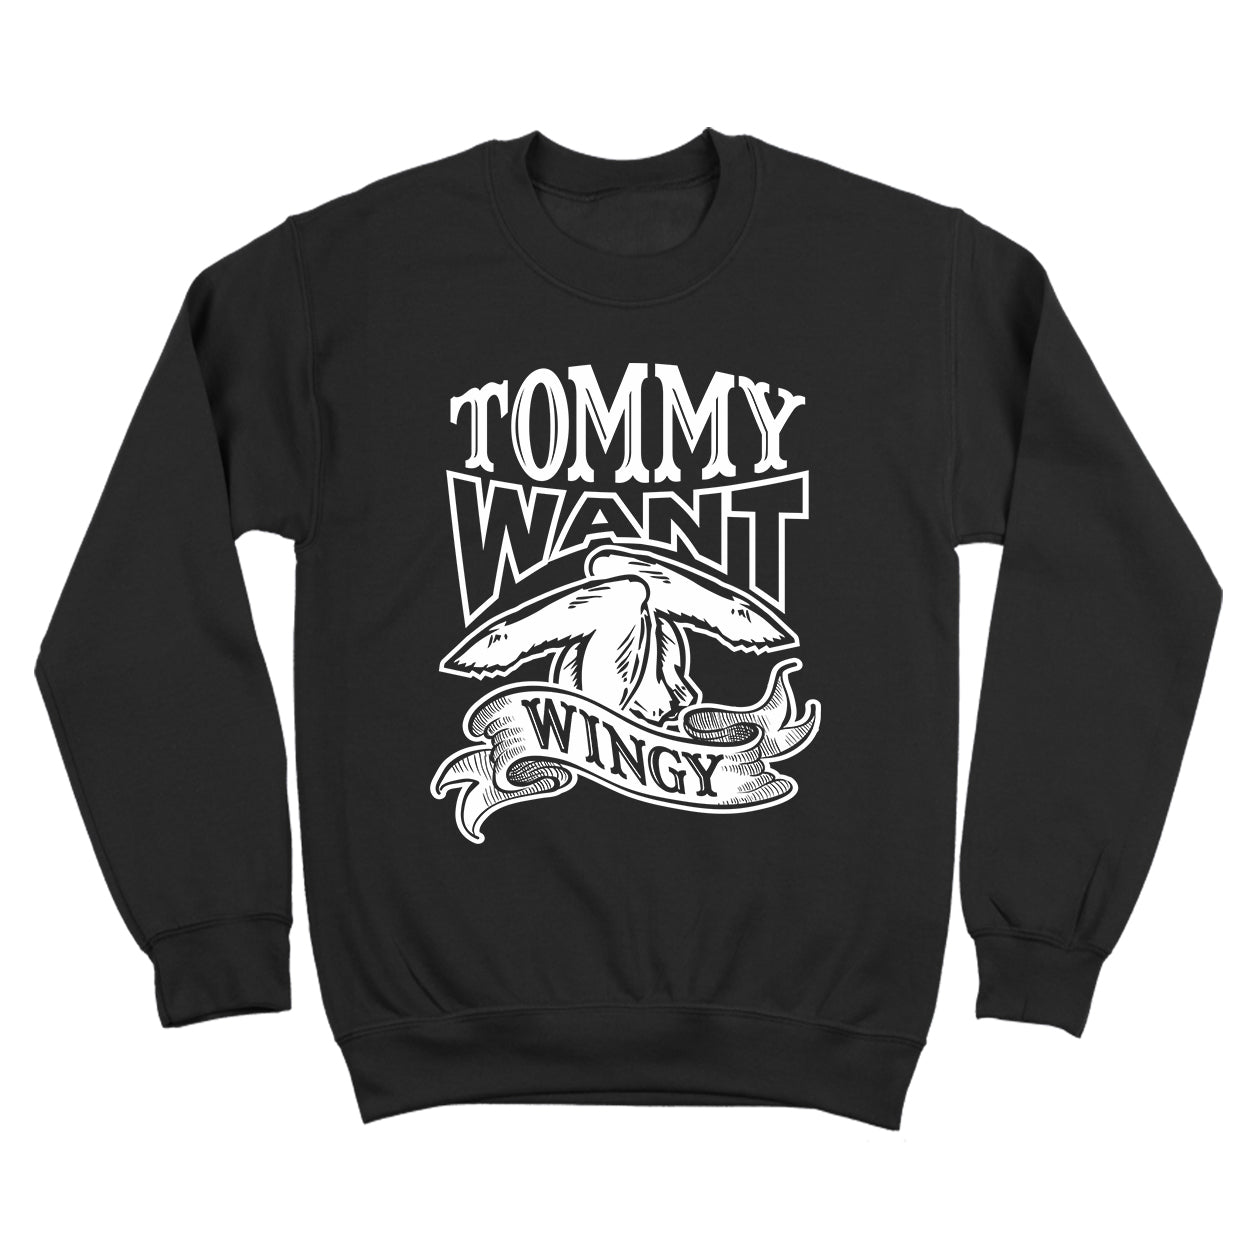 Tommy Want Wingy Tshirt - Donkey Tees